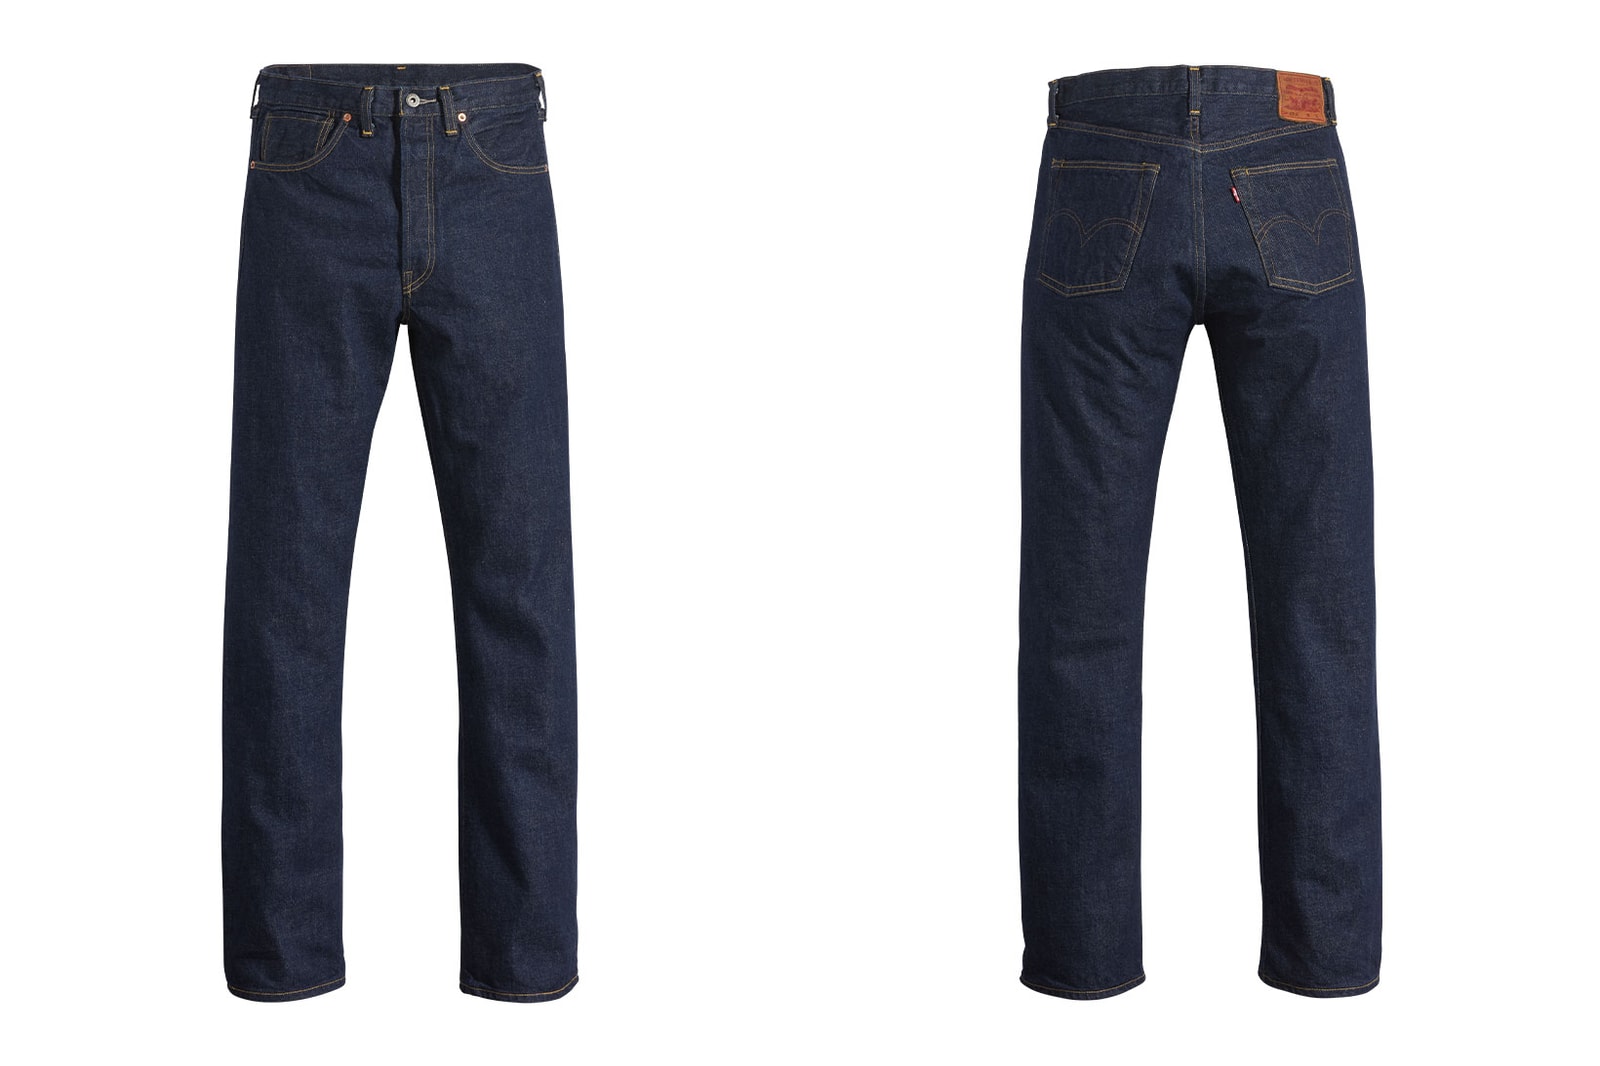 Human Made Levi's Spring Collaboration Denim Jacket Jeans 1944 501 506 Release Date